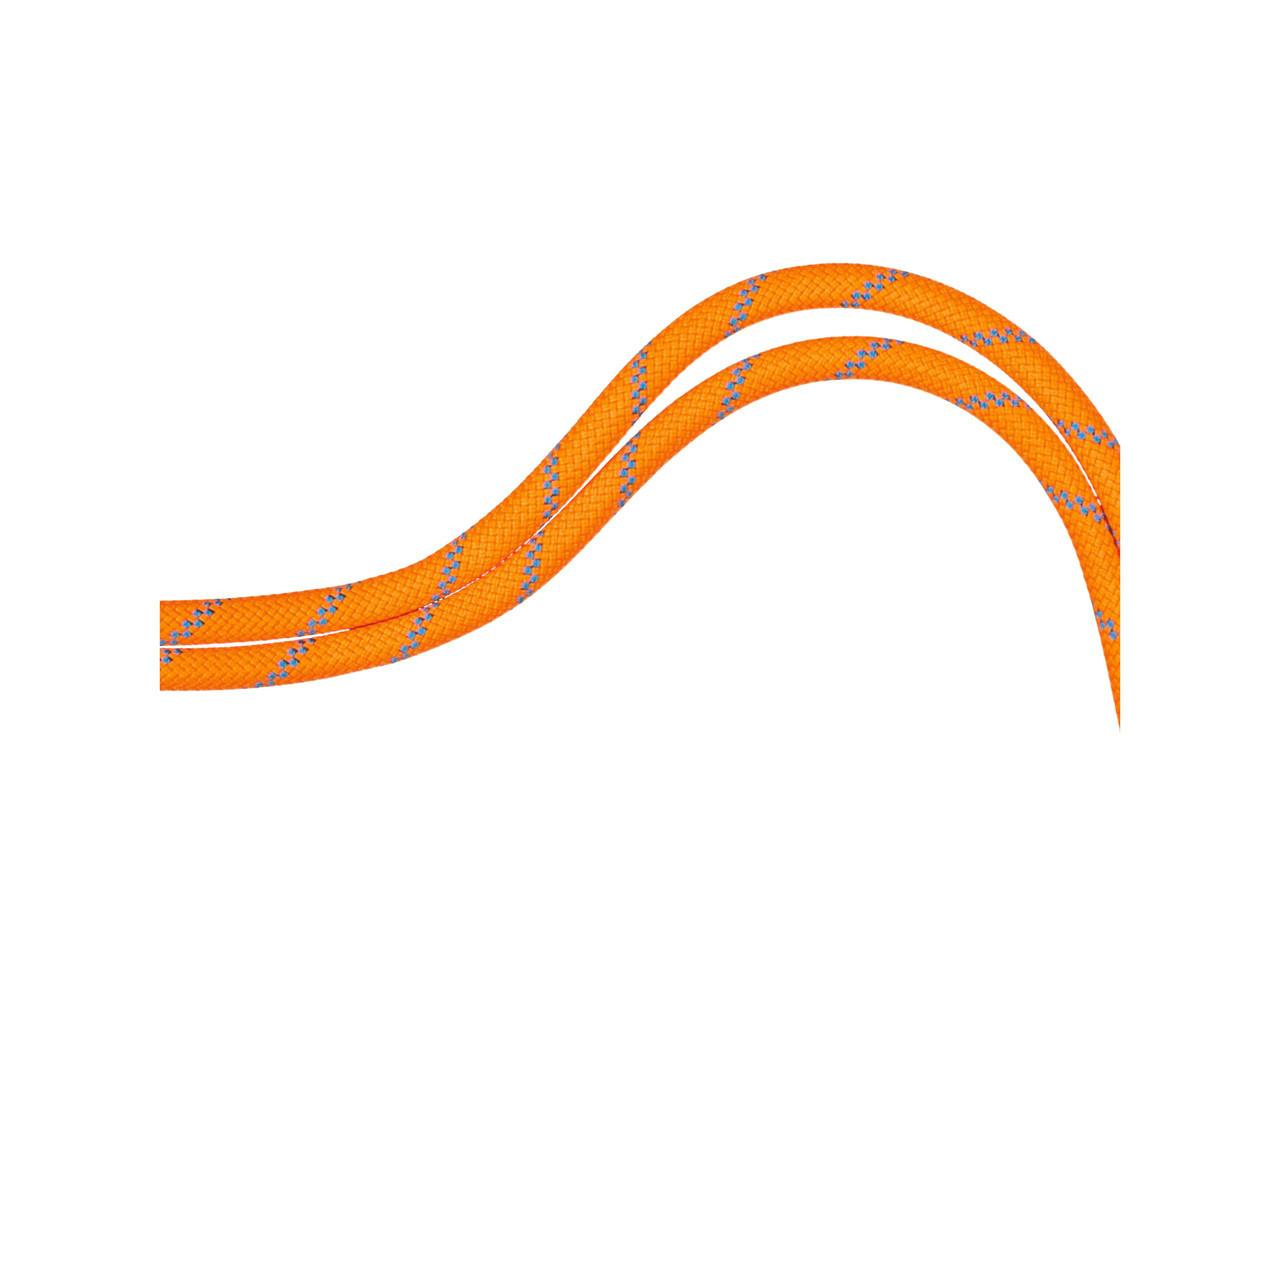 8.7 Alpine Sender Dry Rope Vibrant Orange/Ocean